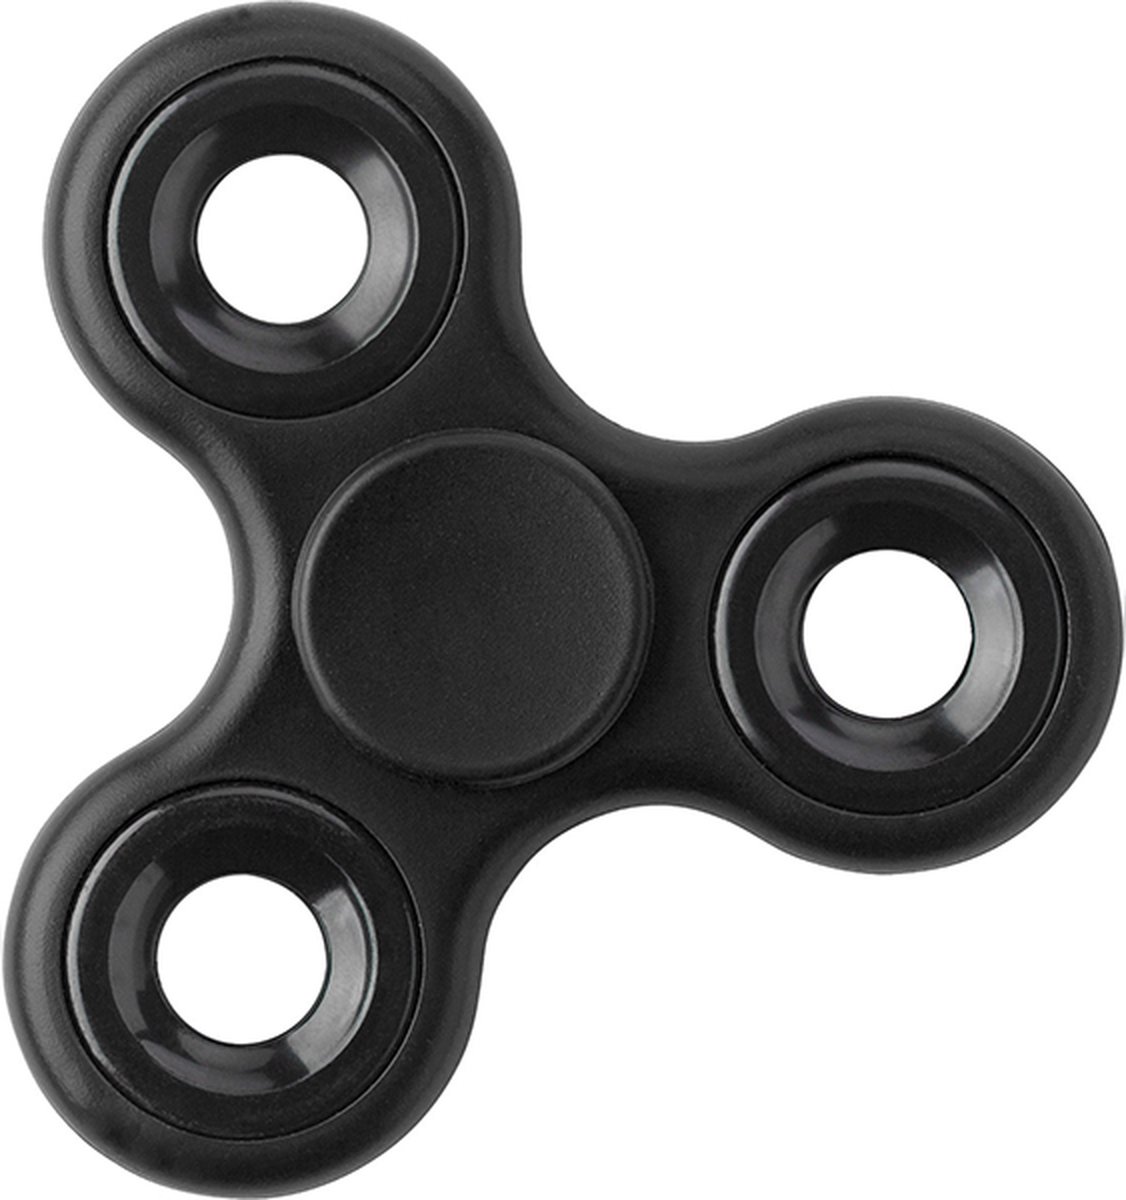 Fidget spinner Black - Langdurige spin - Hoogwaardig merk Hand spinner - Uniek design!